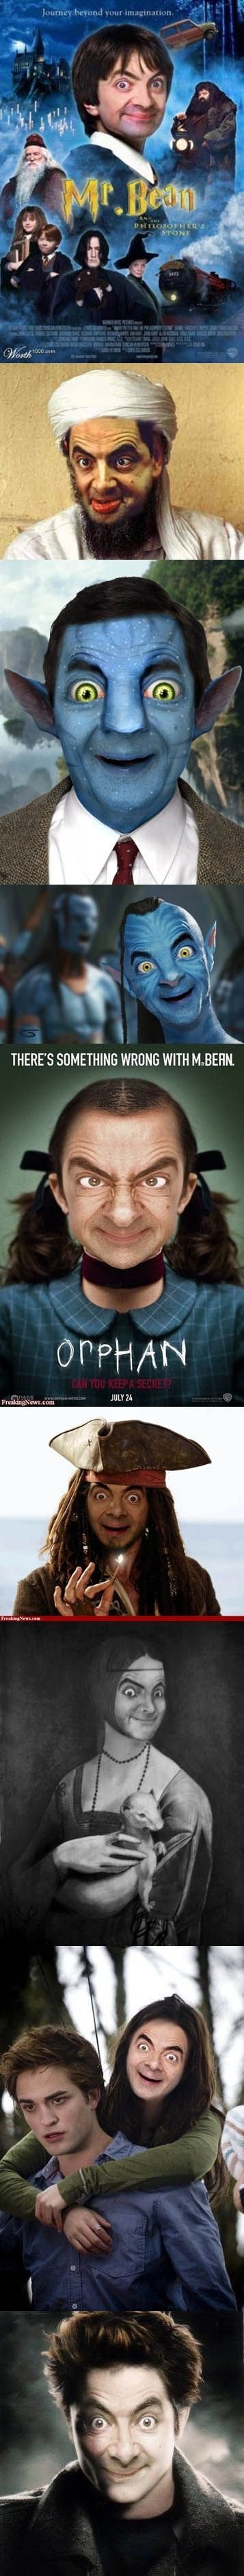 Just Mr. Bean.